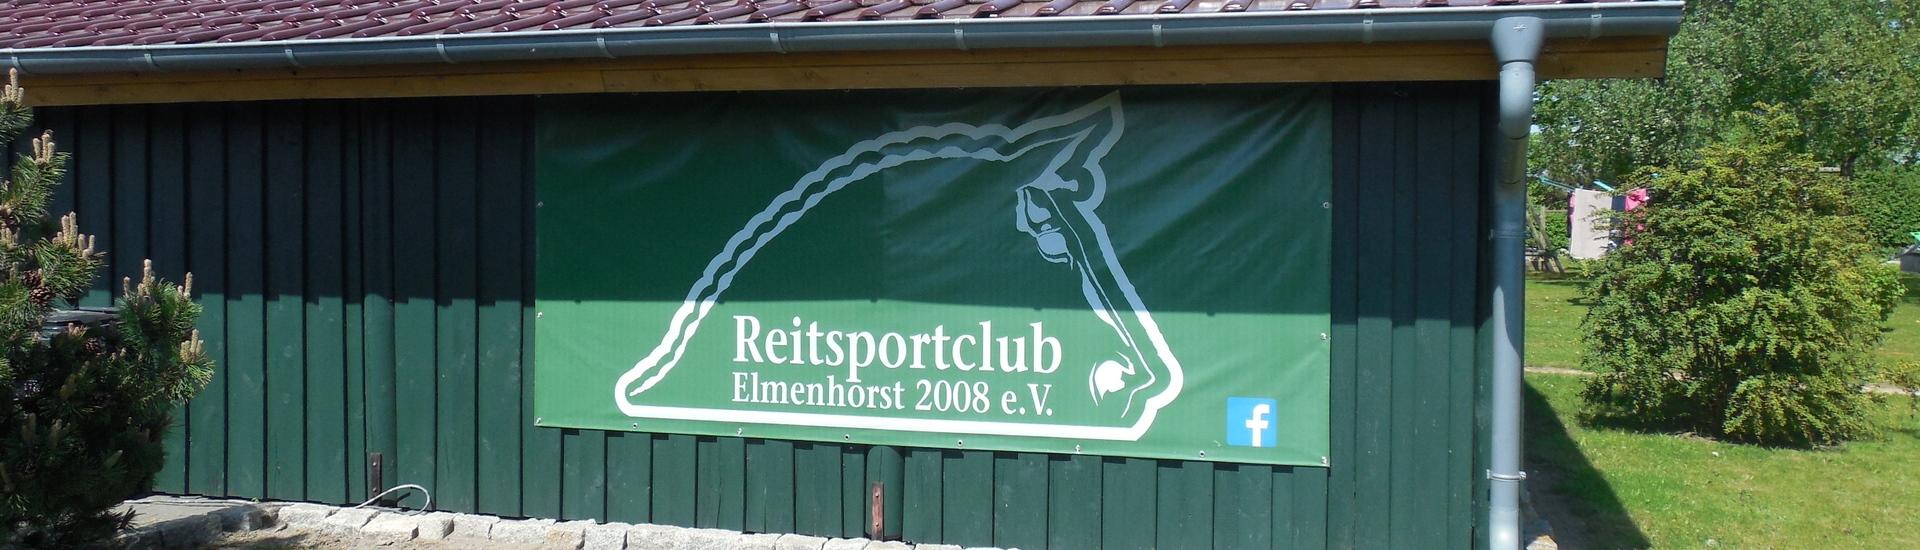 Reitsportclub_Elmenhorst